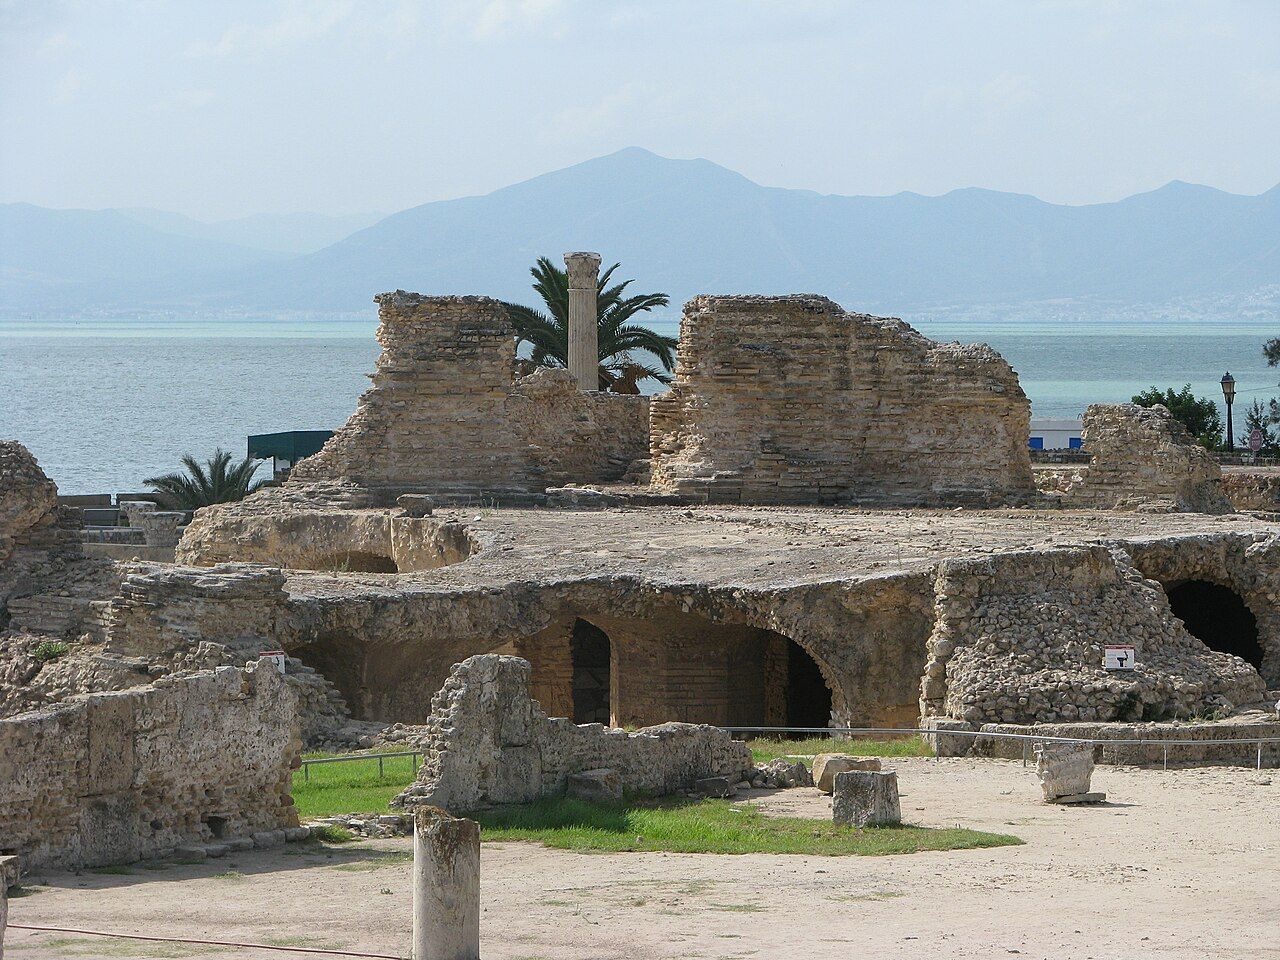 The Antonine baths in Tunisia